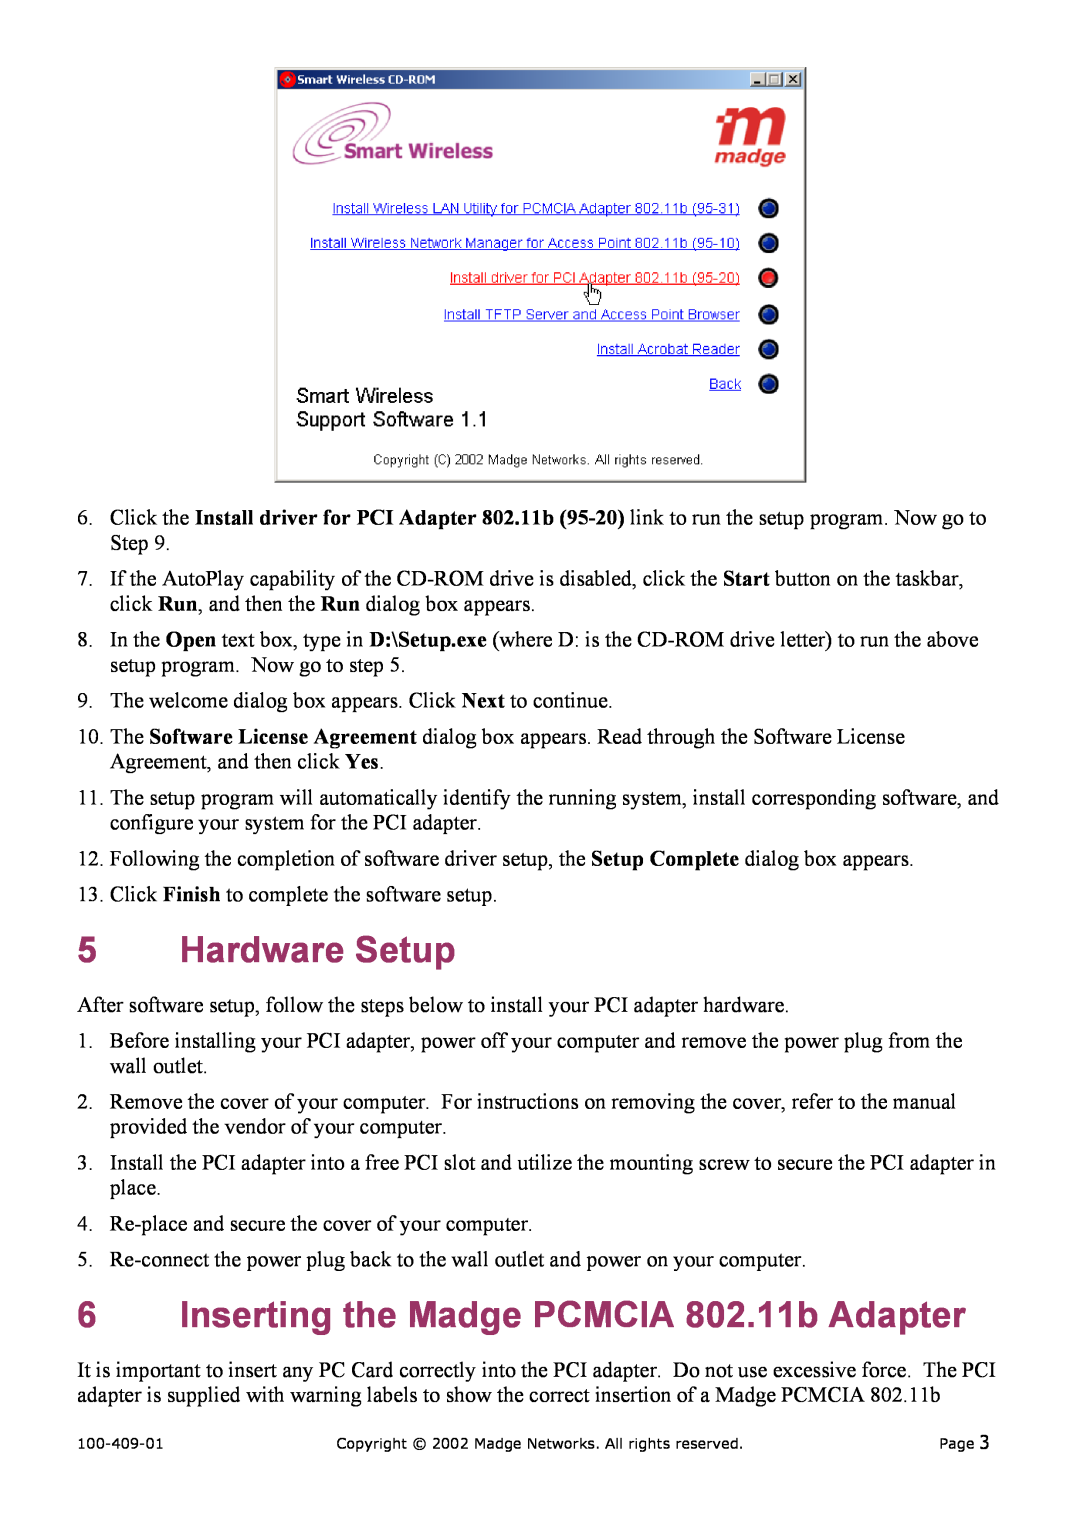 Madge Networks 802.11B (95-20) manual Hardware Setup, Inserting the Madge PCMCIA 802.11b Adapter 